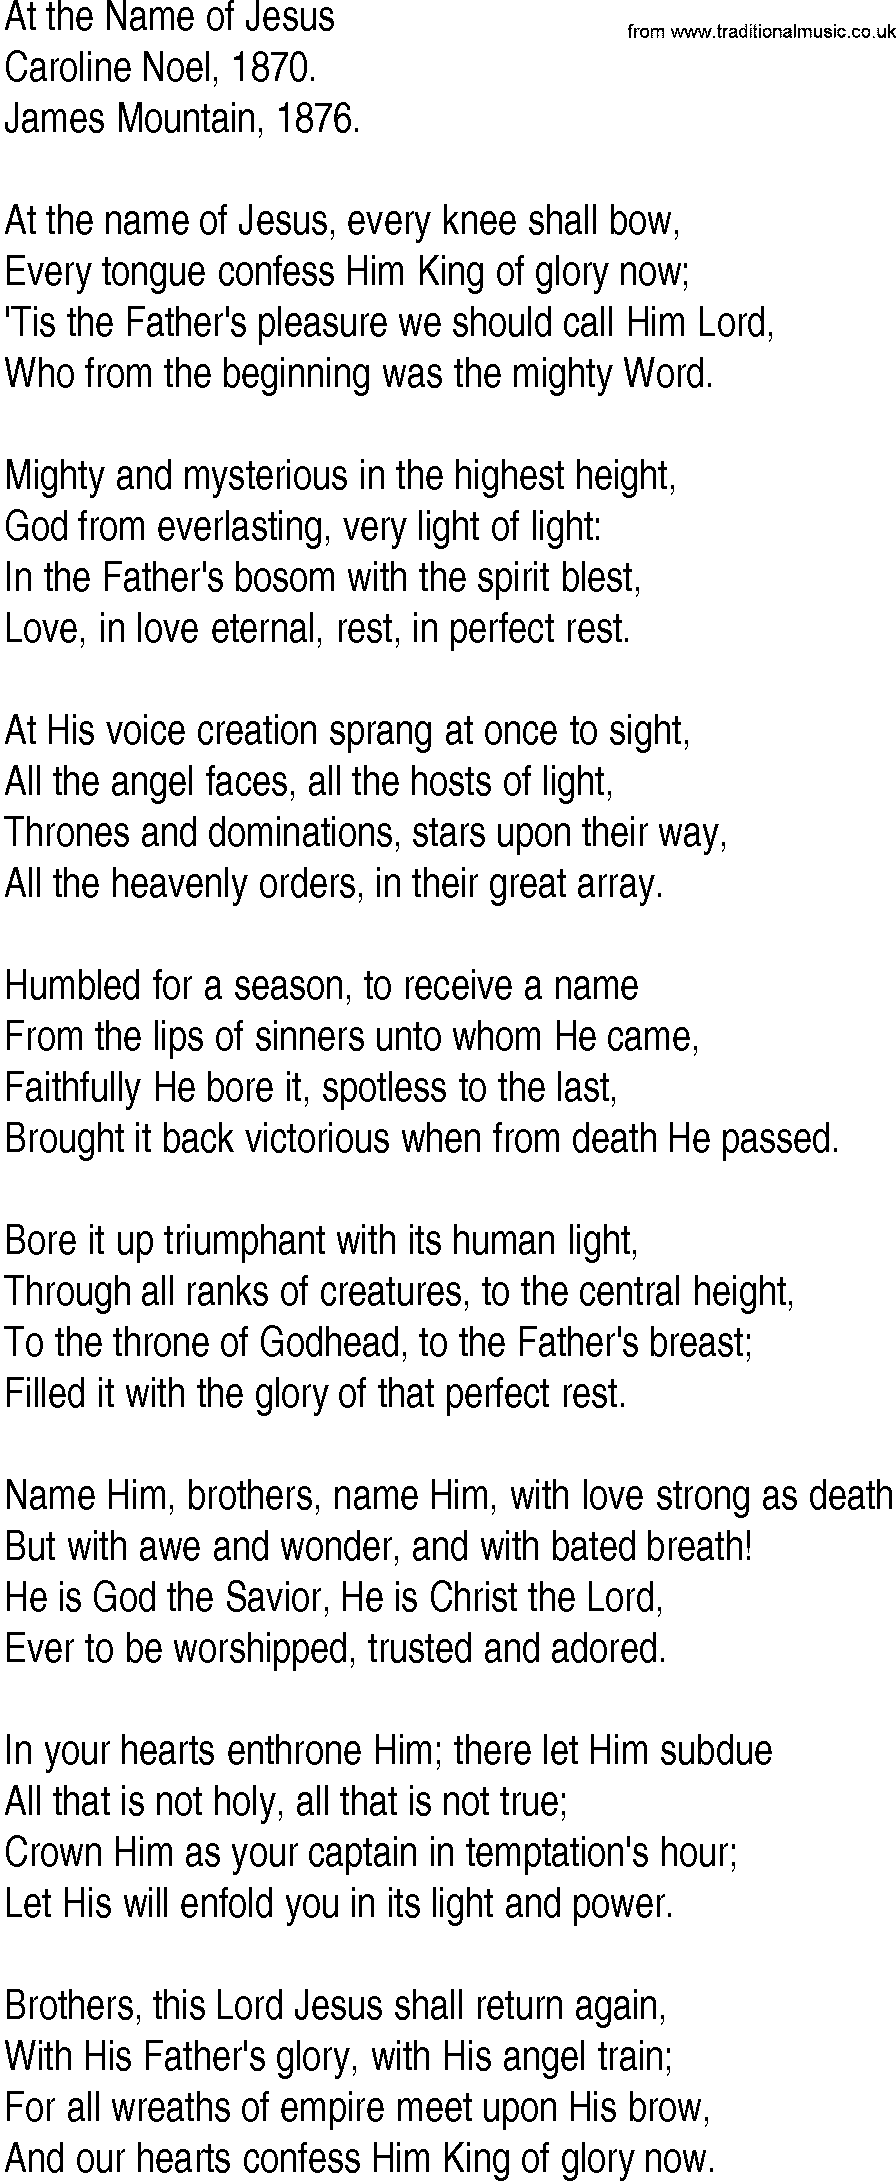 Hymn and Gospel Song: At the Name of Jesus by Caroline Noel lyrics